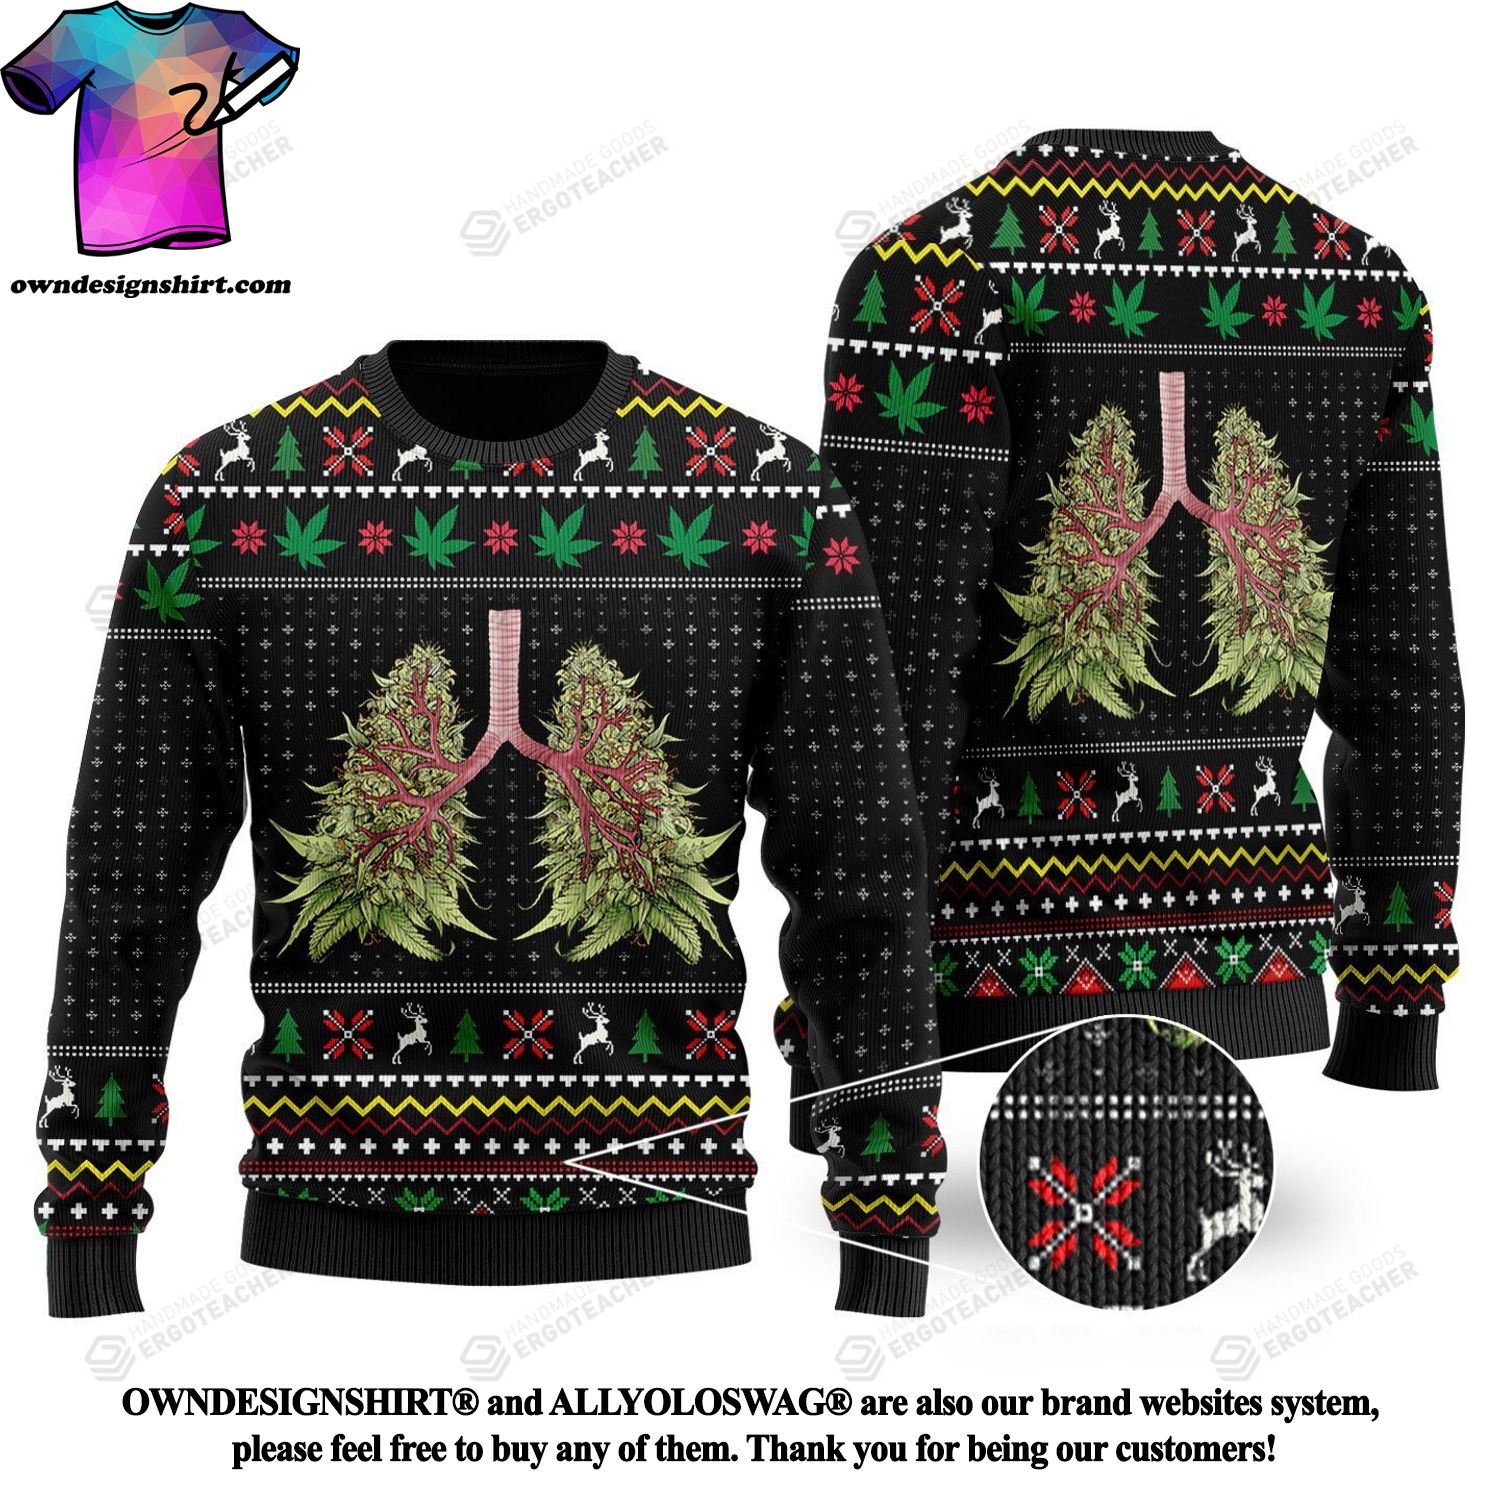 NHL Anaheim Ducks Skull Flower Ugly Christmas Sweater - LIMITED